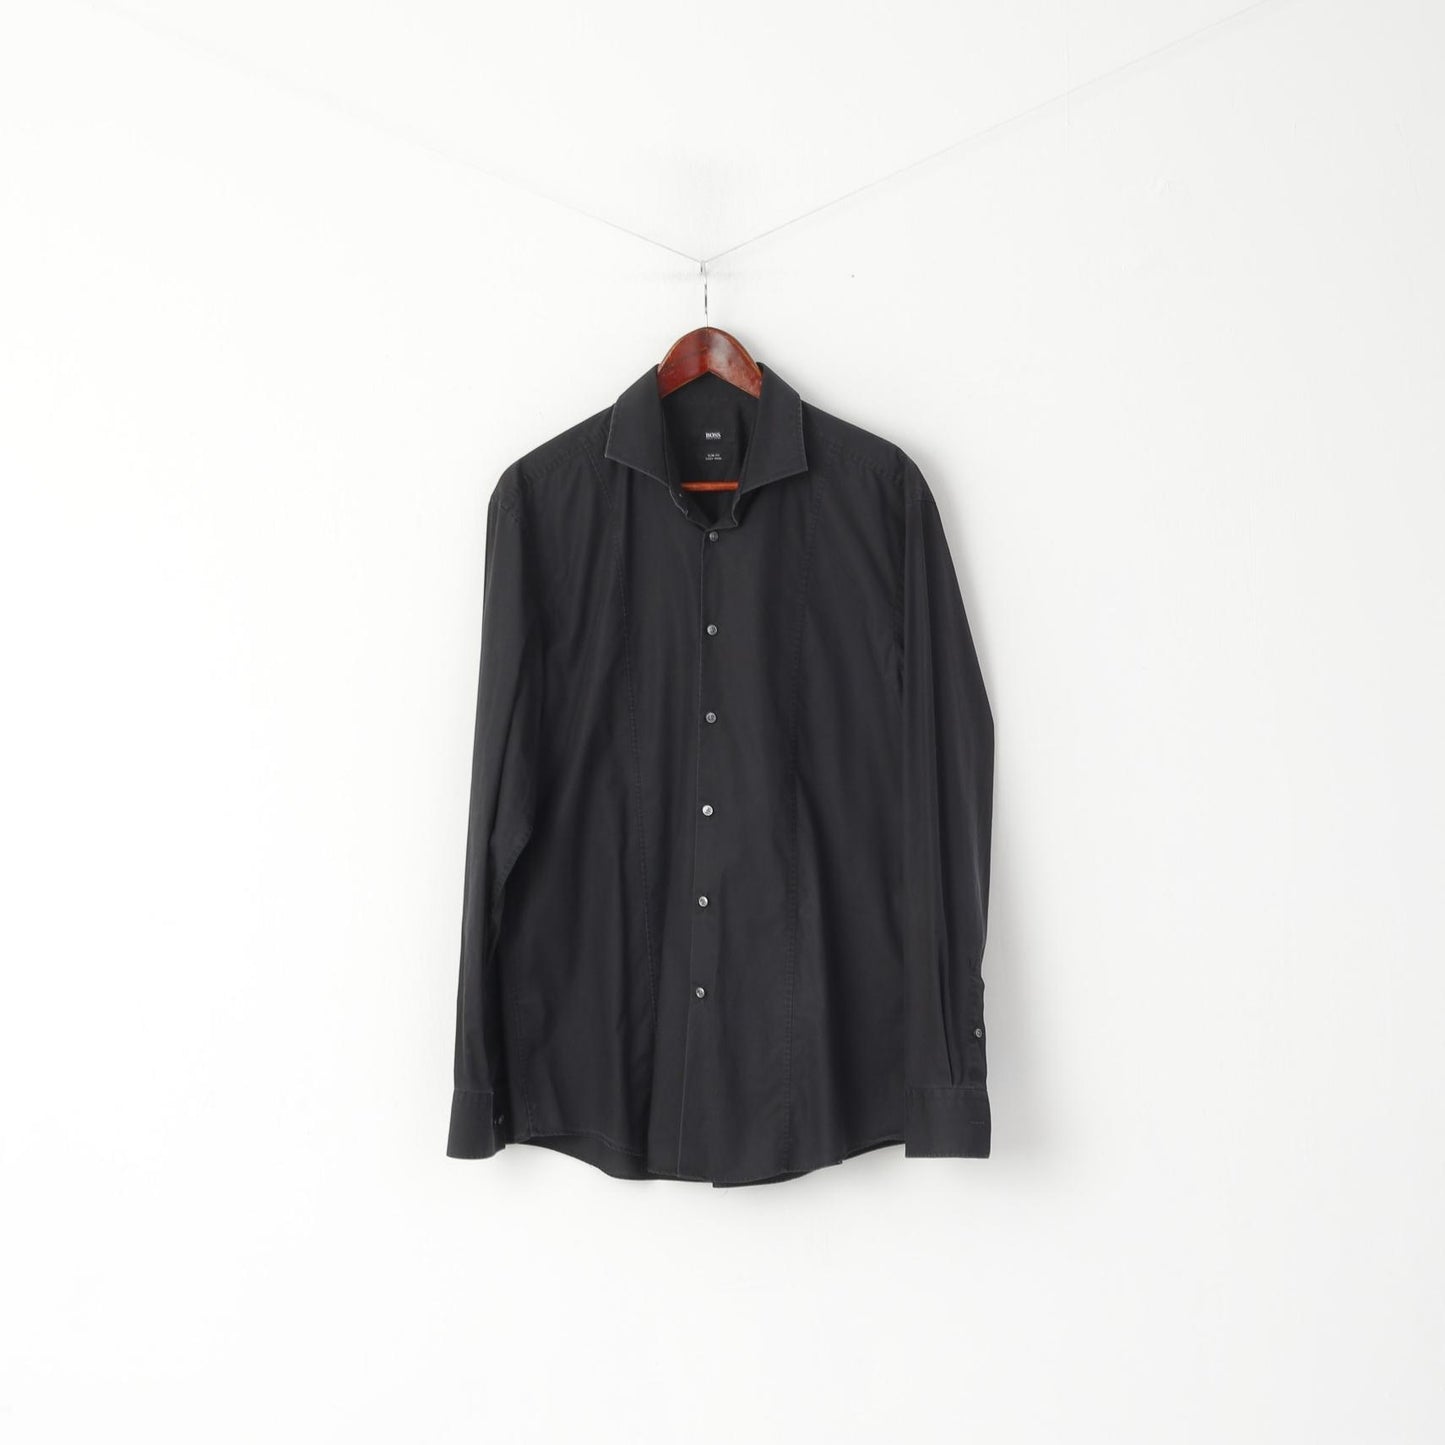 Hugo Boss Men 43 17 M Casual Shirt Black Cotton Slim Fit Long Sleeve Top